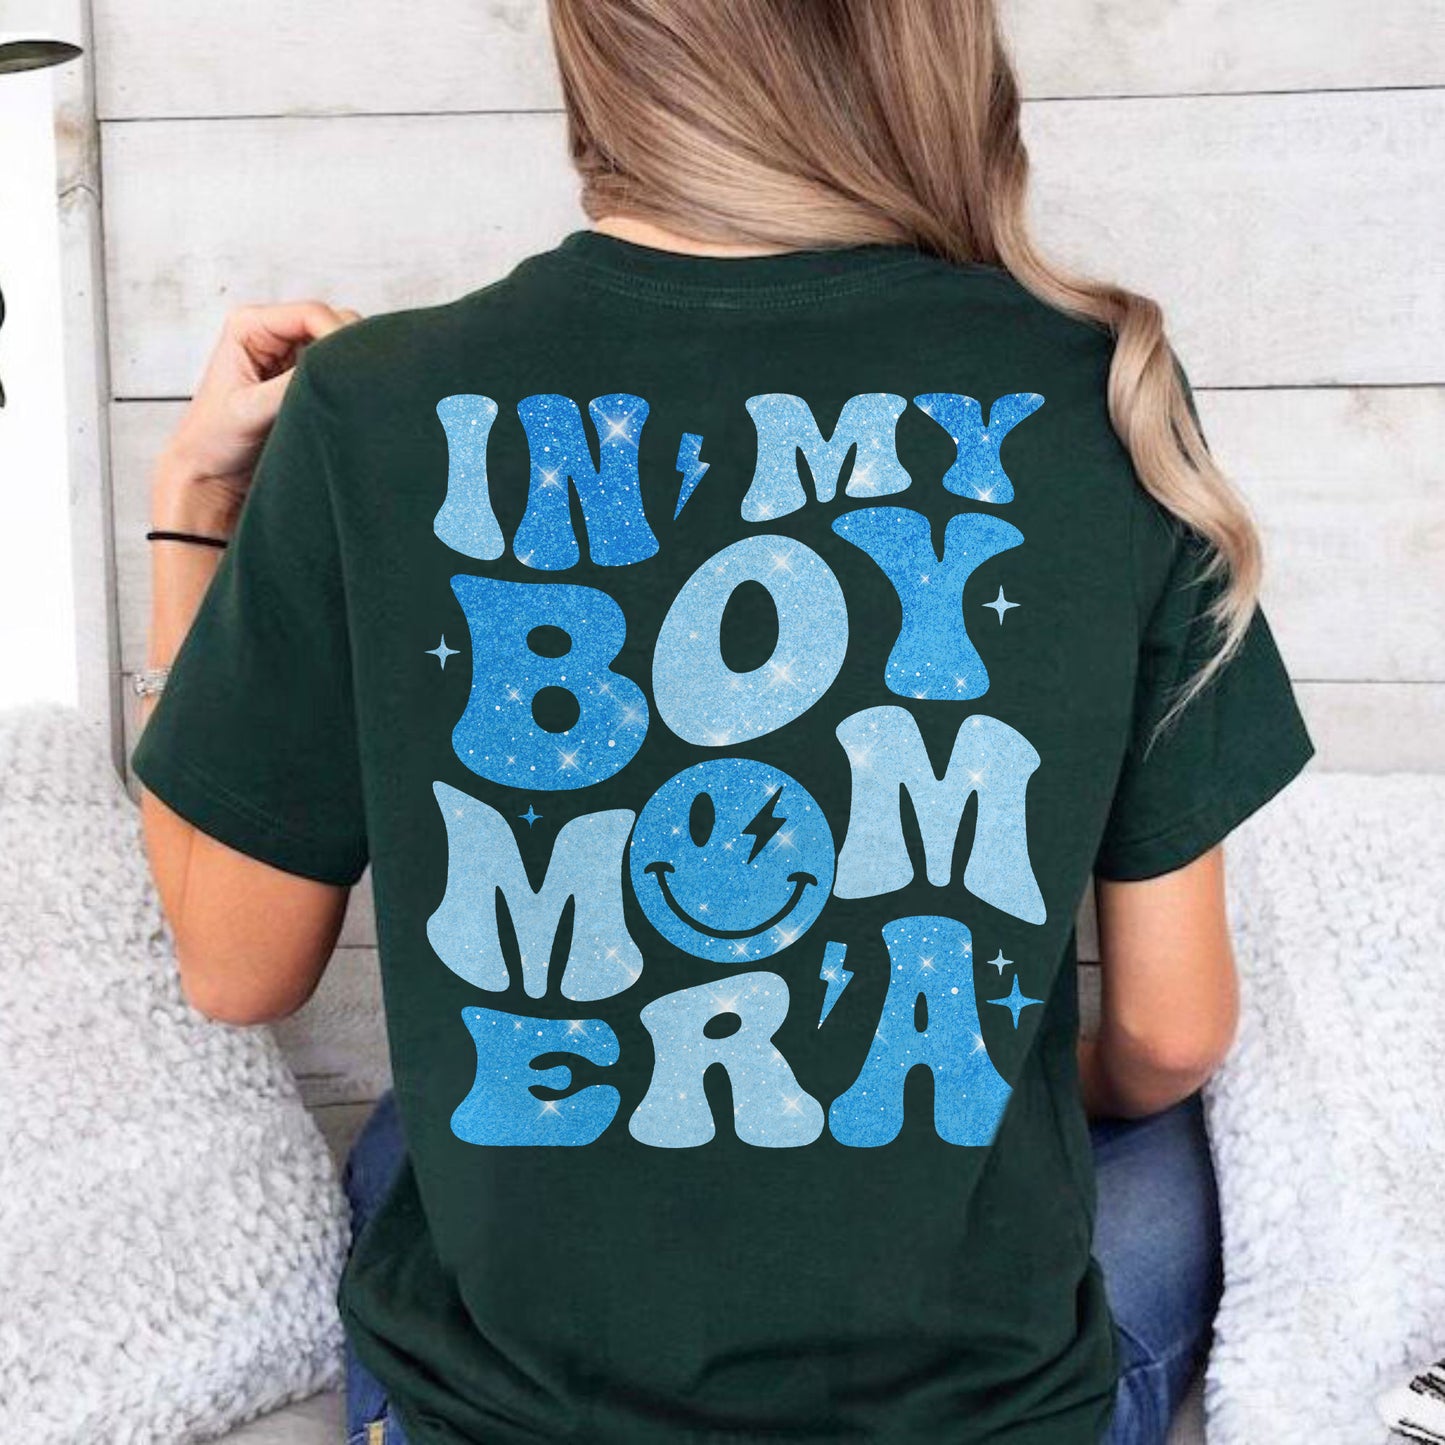 In Boy Mom Era Shirt - Boy Mama Era Gift